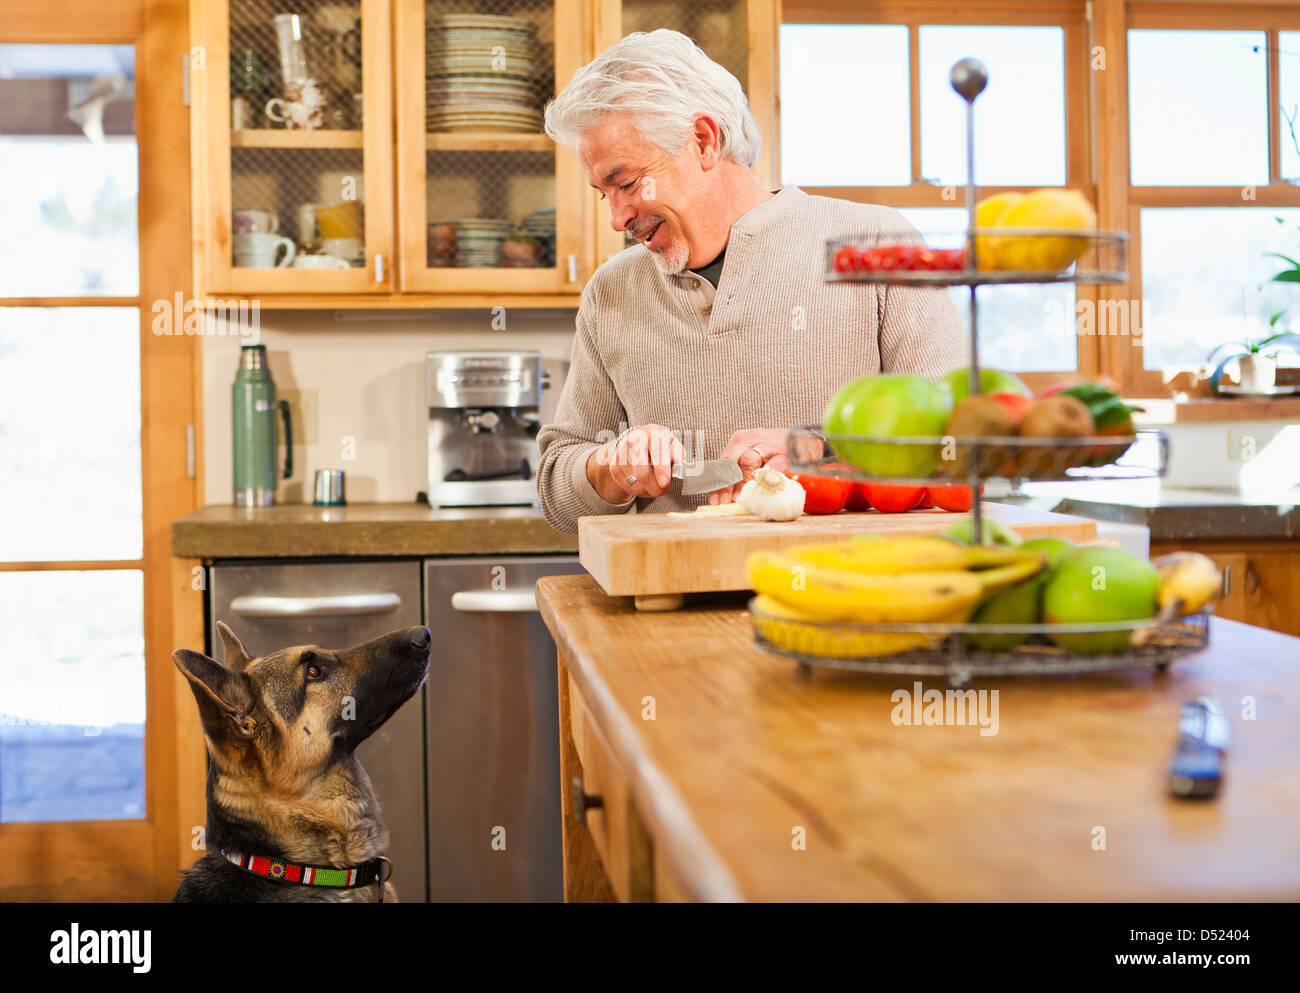 Hispanic Mann mit Hund betteln in Küche Stockfoto